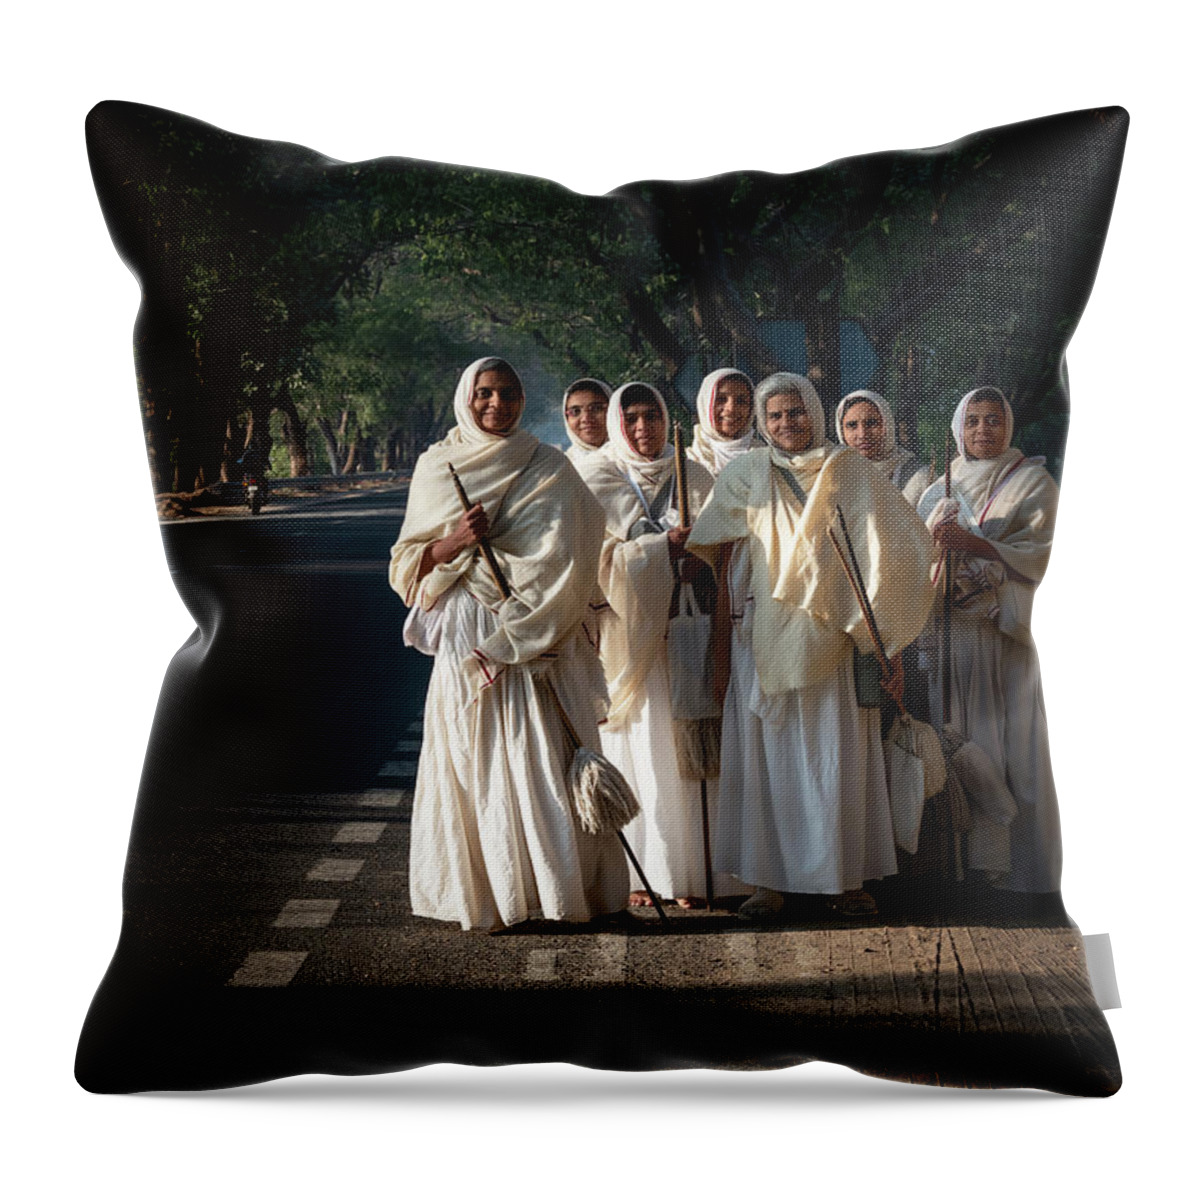 India Throw Pillow featuring the photograph Jain nuns in Gujarat. by Usha Peddamatham